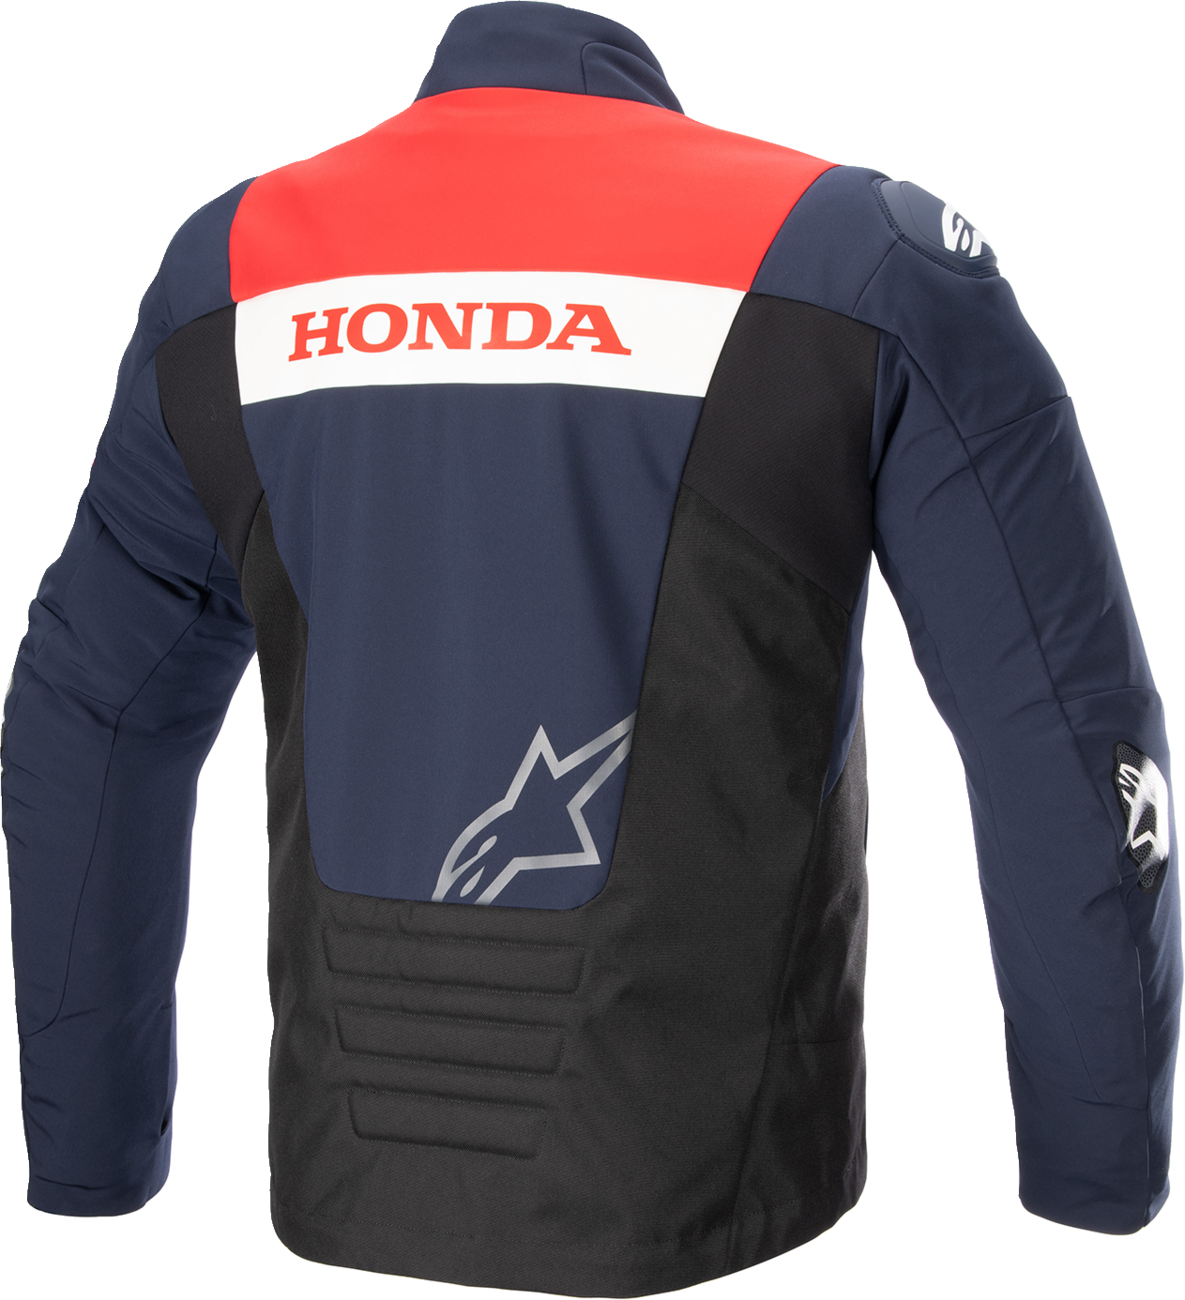 ALPINESTARS Honda SMX Waterproof Jacket - Blue/Black/Red - 4XL 3206223-7163-4X